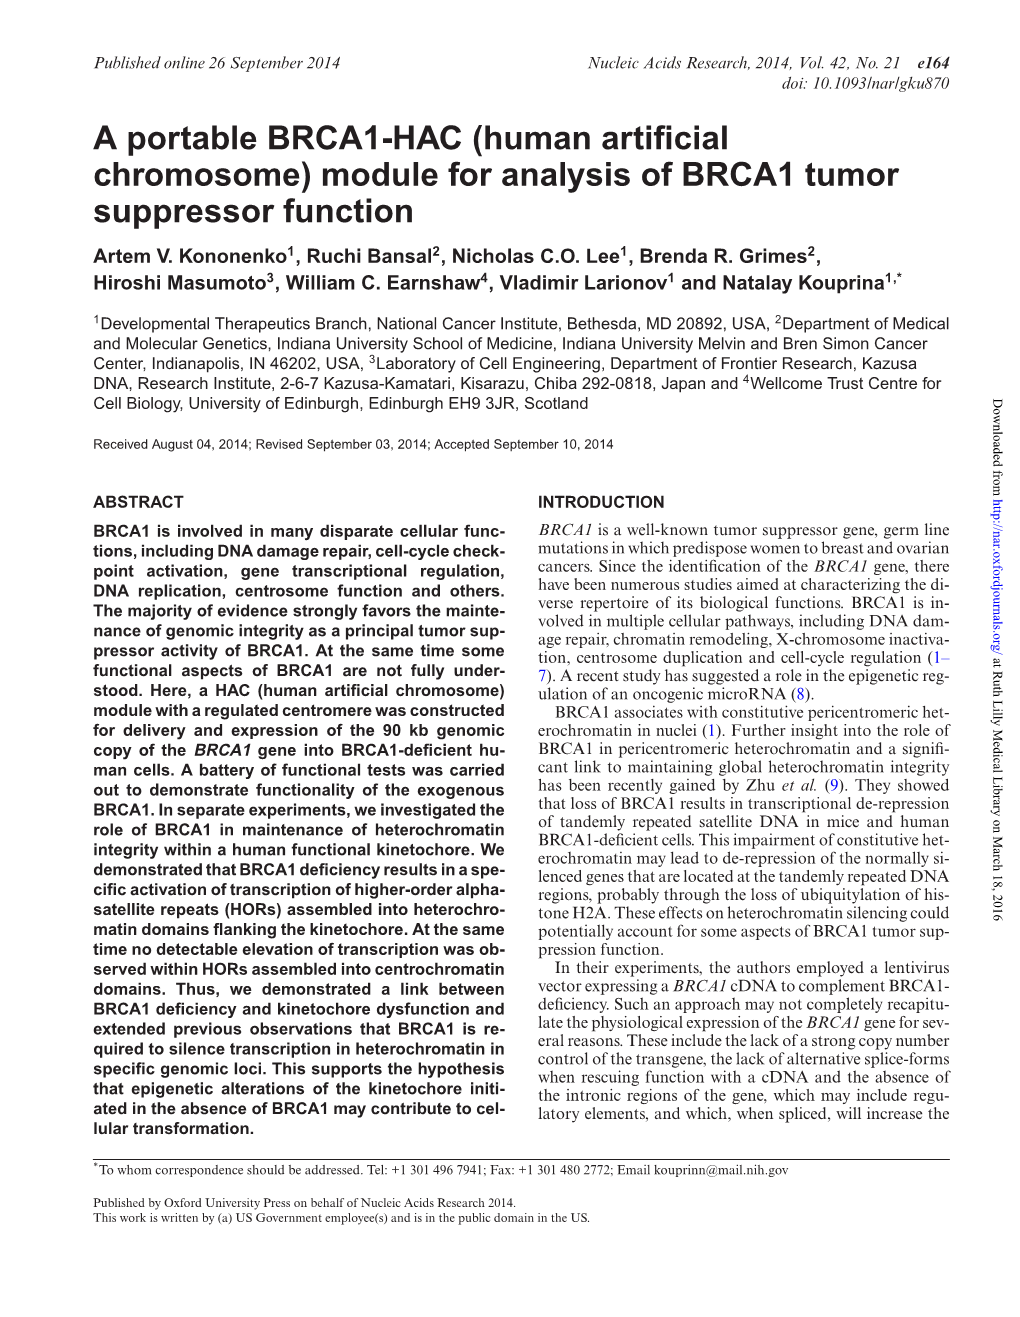 A Portable BRCA1-HAC (Human Artificial Chromosome) Module For